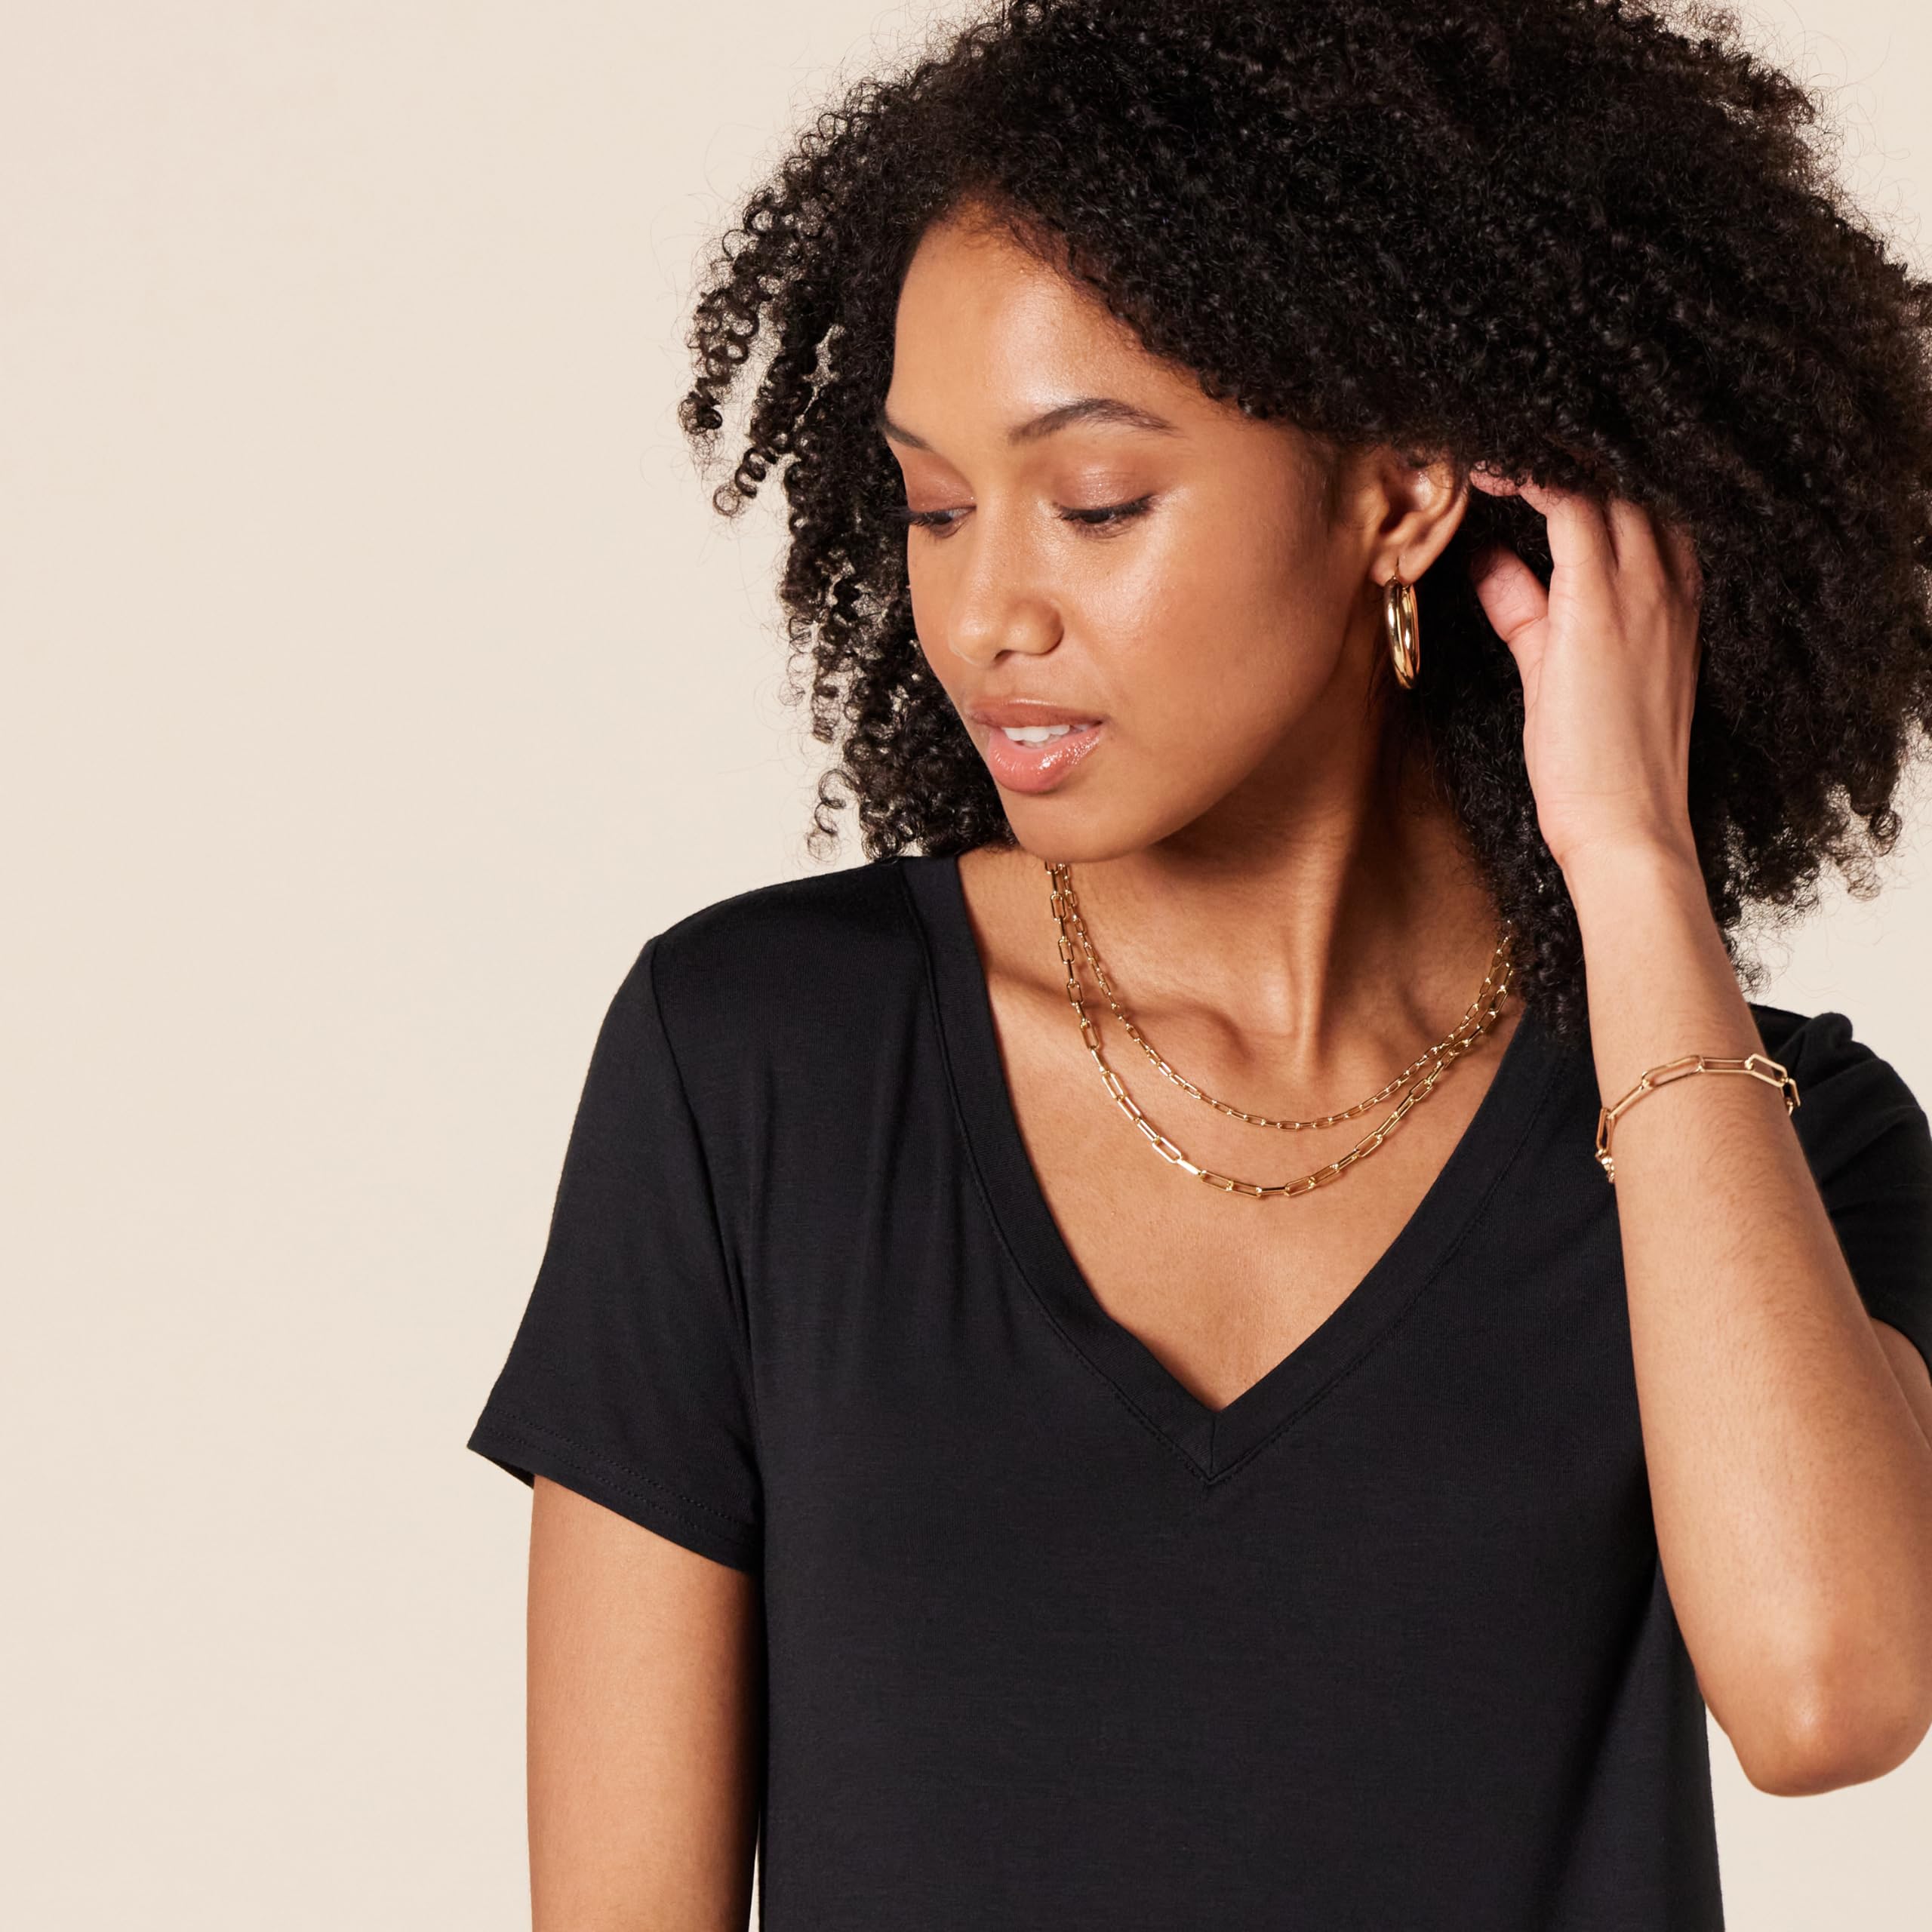 Amazon Essentials Women's Jersey V-Neck Short Sleeve Midi Length Dress